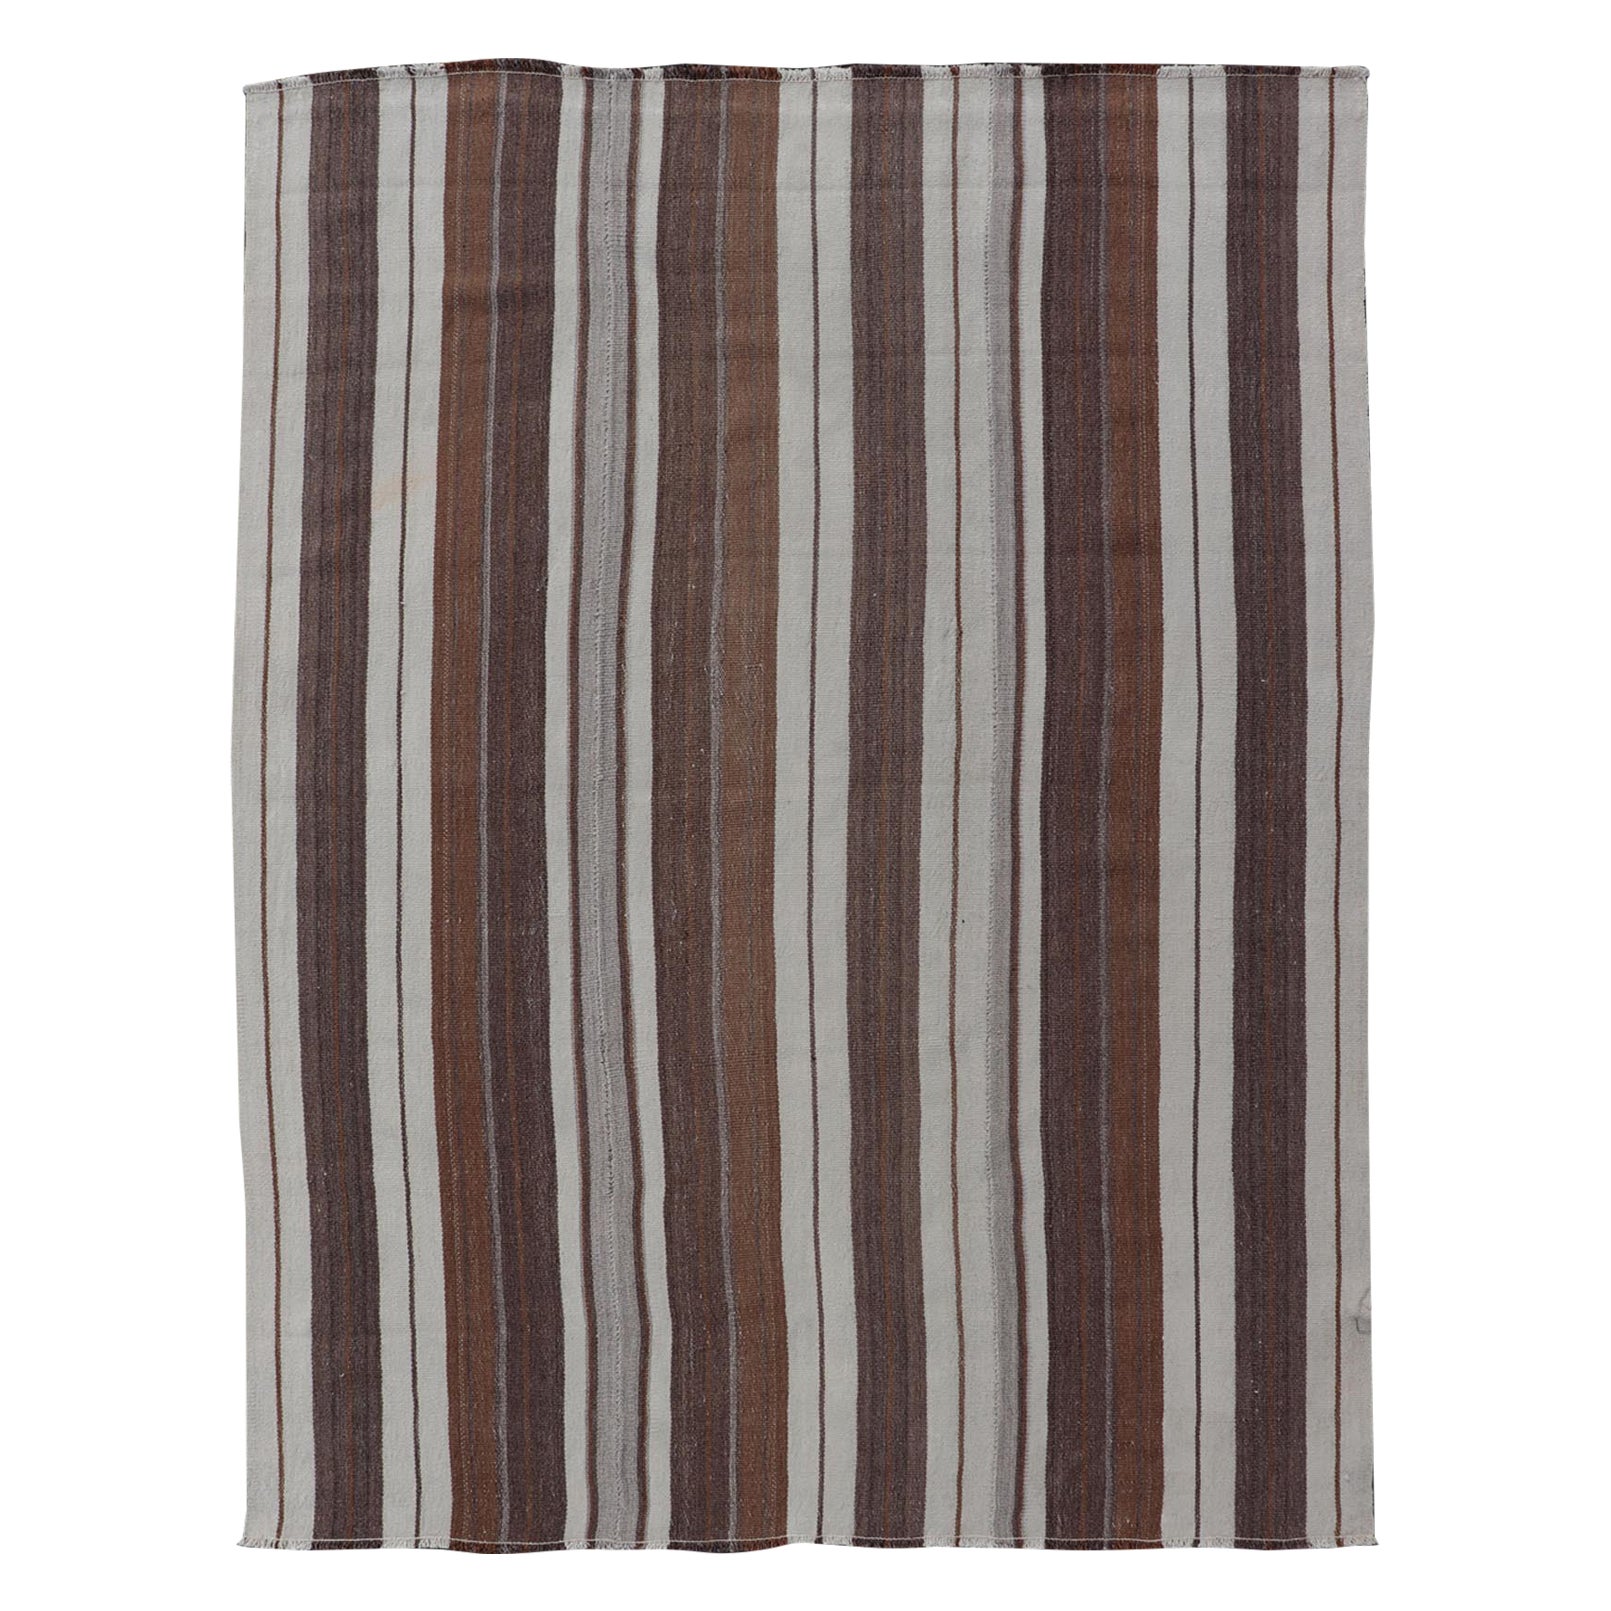 Stripe Design Turkish Vintage Flat-Weave Rug in Brown, Cognac, Ivory, and Gray